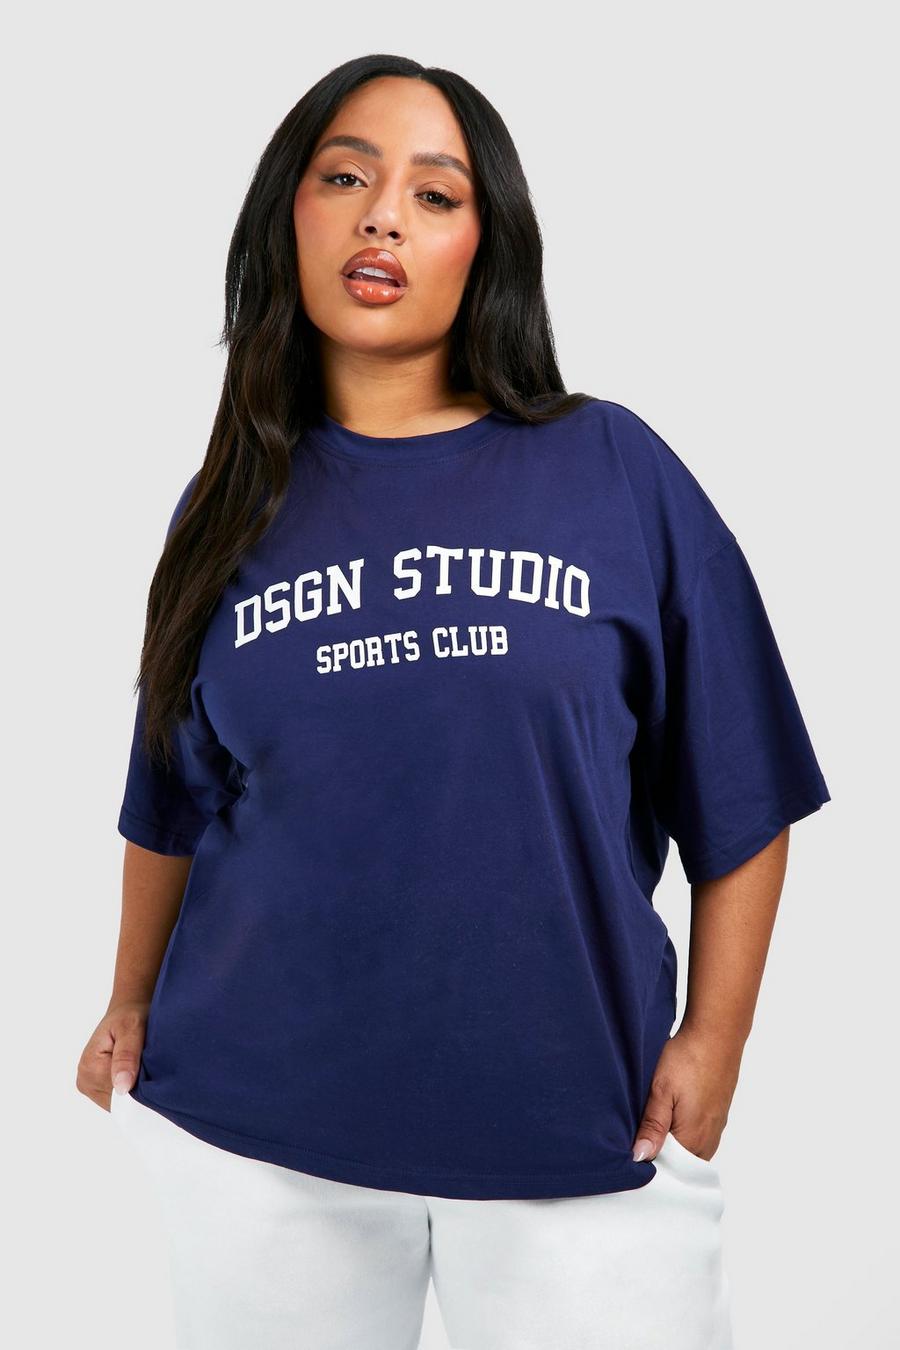 T-shirt Plus Size oversize Dsgn Studio Sports Club, Navy image number 1